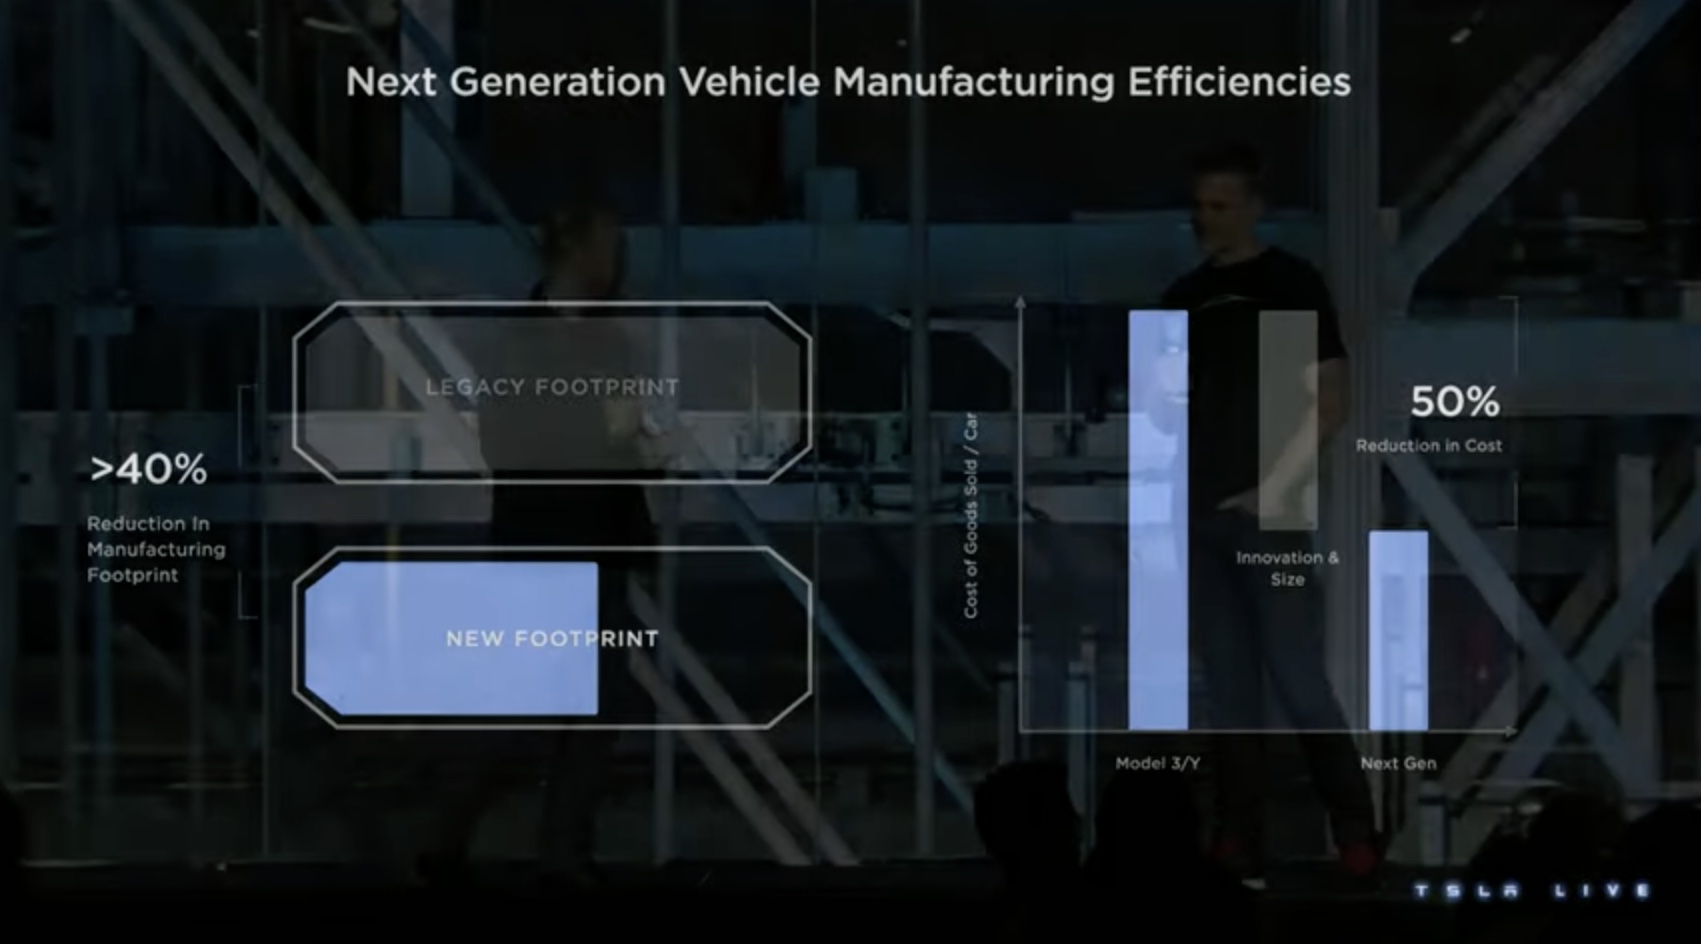 Tesla's Next Generation Auto Investor Day